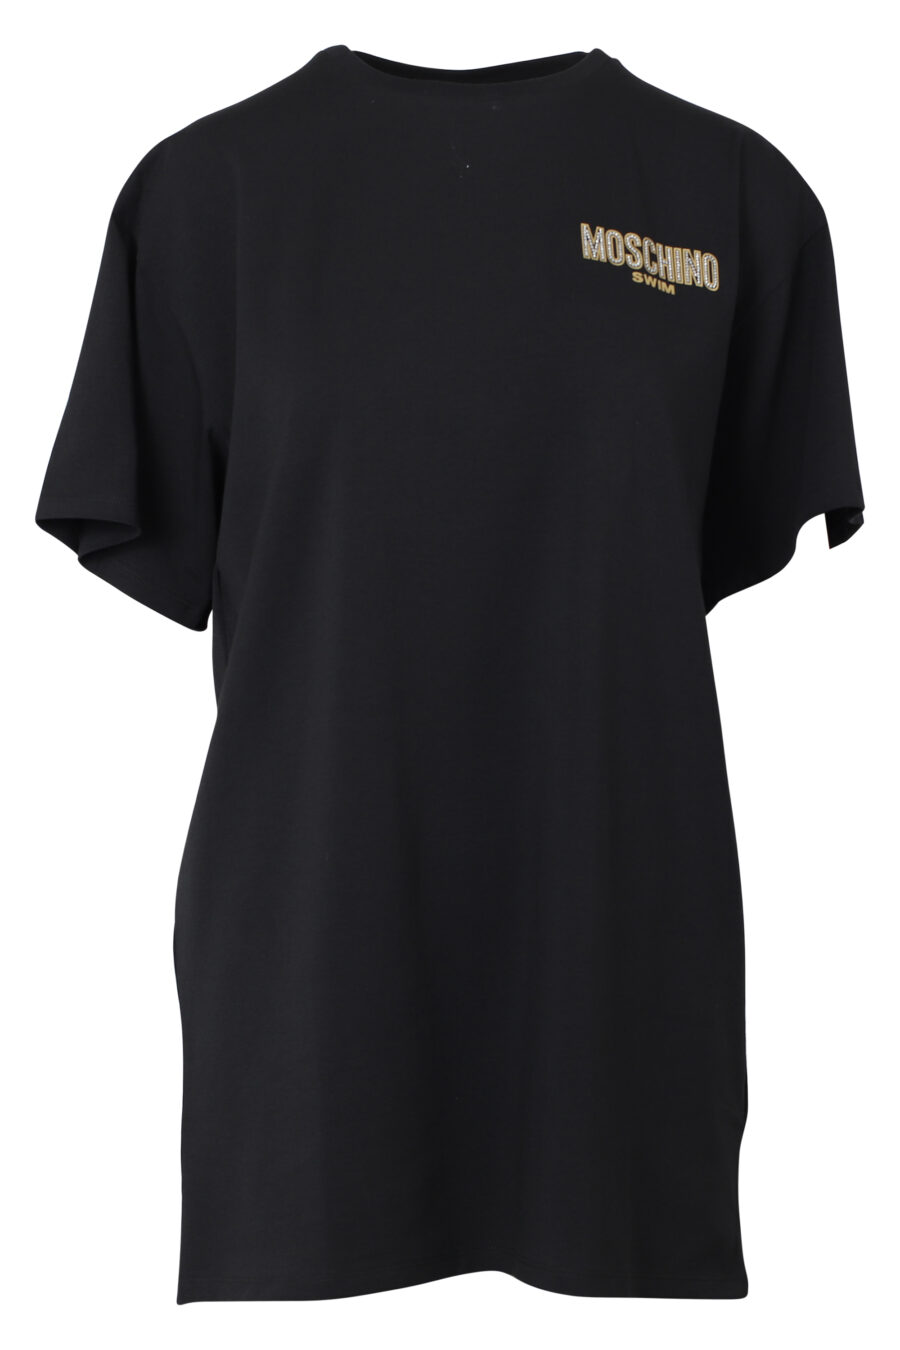 Black maxi T-shirt with gold mini-logo in rhinestones - IMG 9811